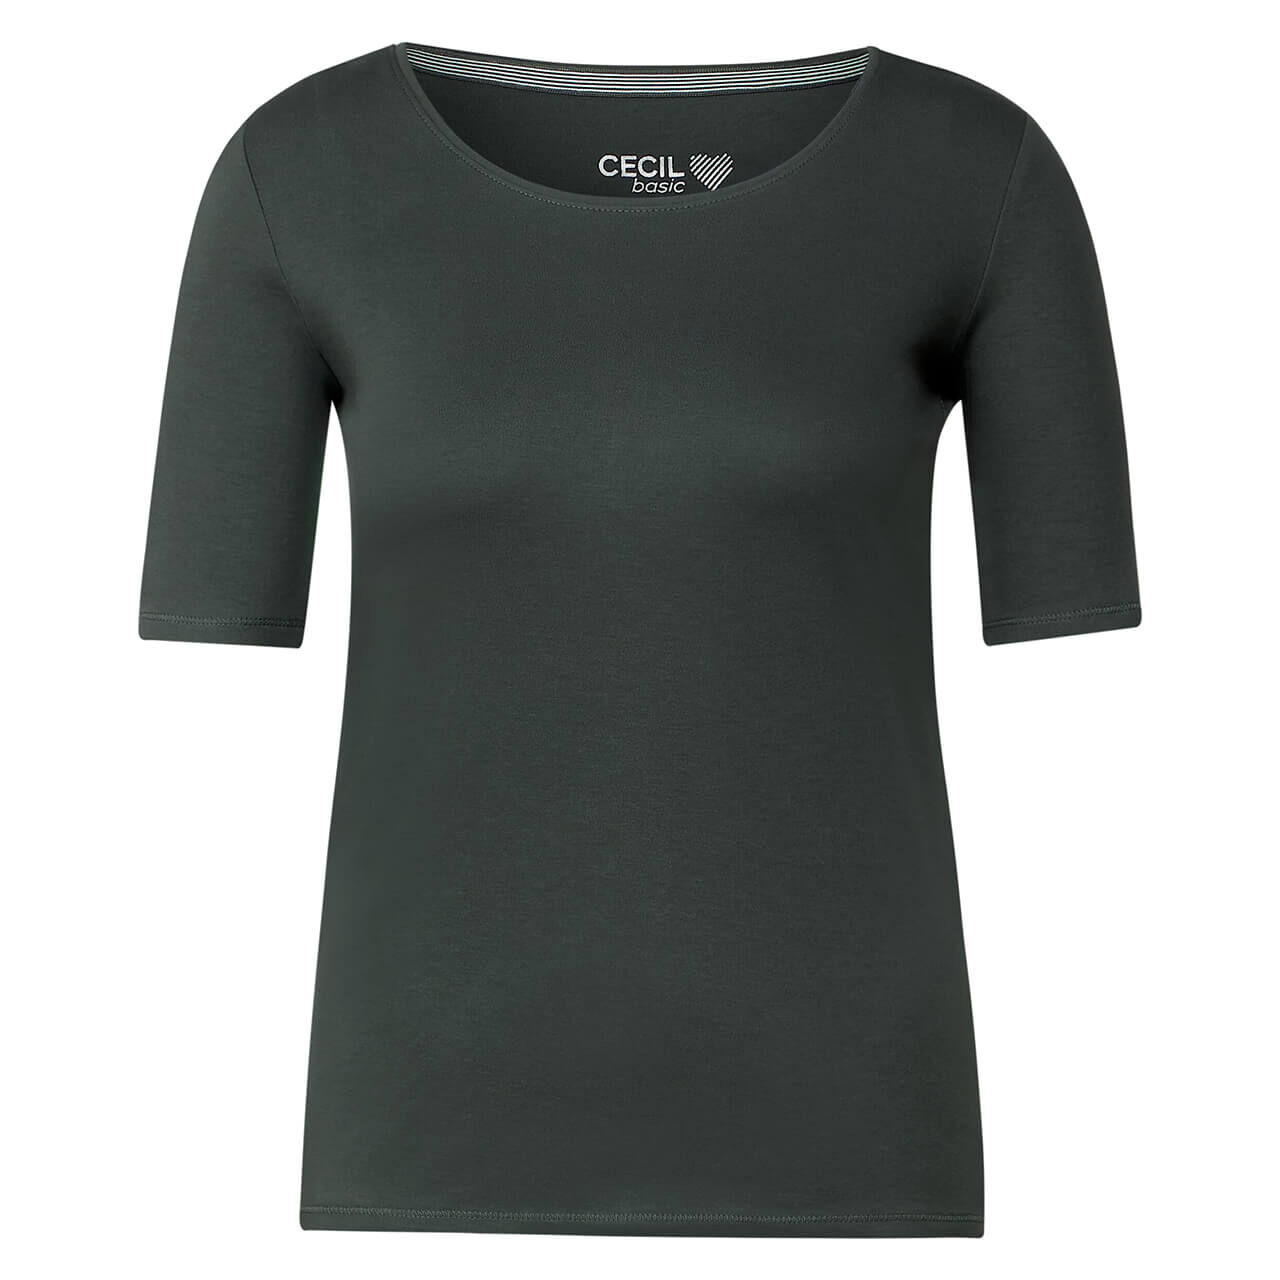 Cecil Lena T-Shirt easy khaki